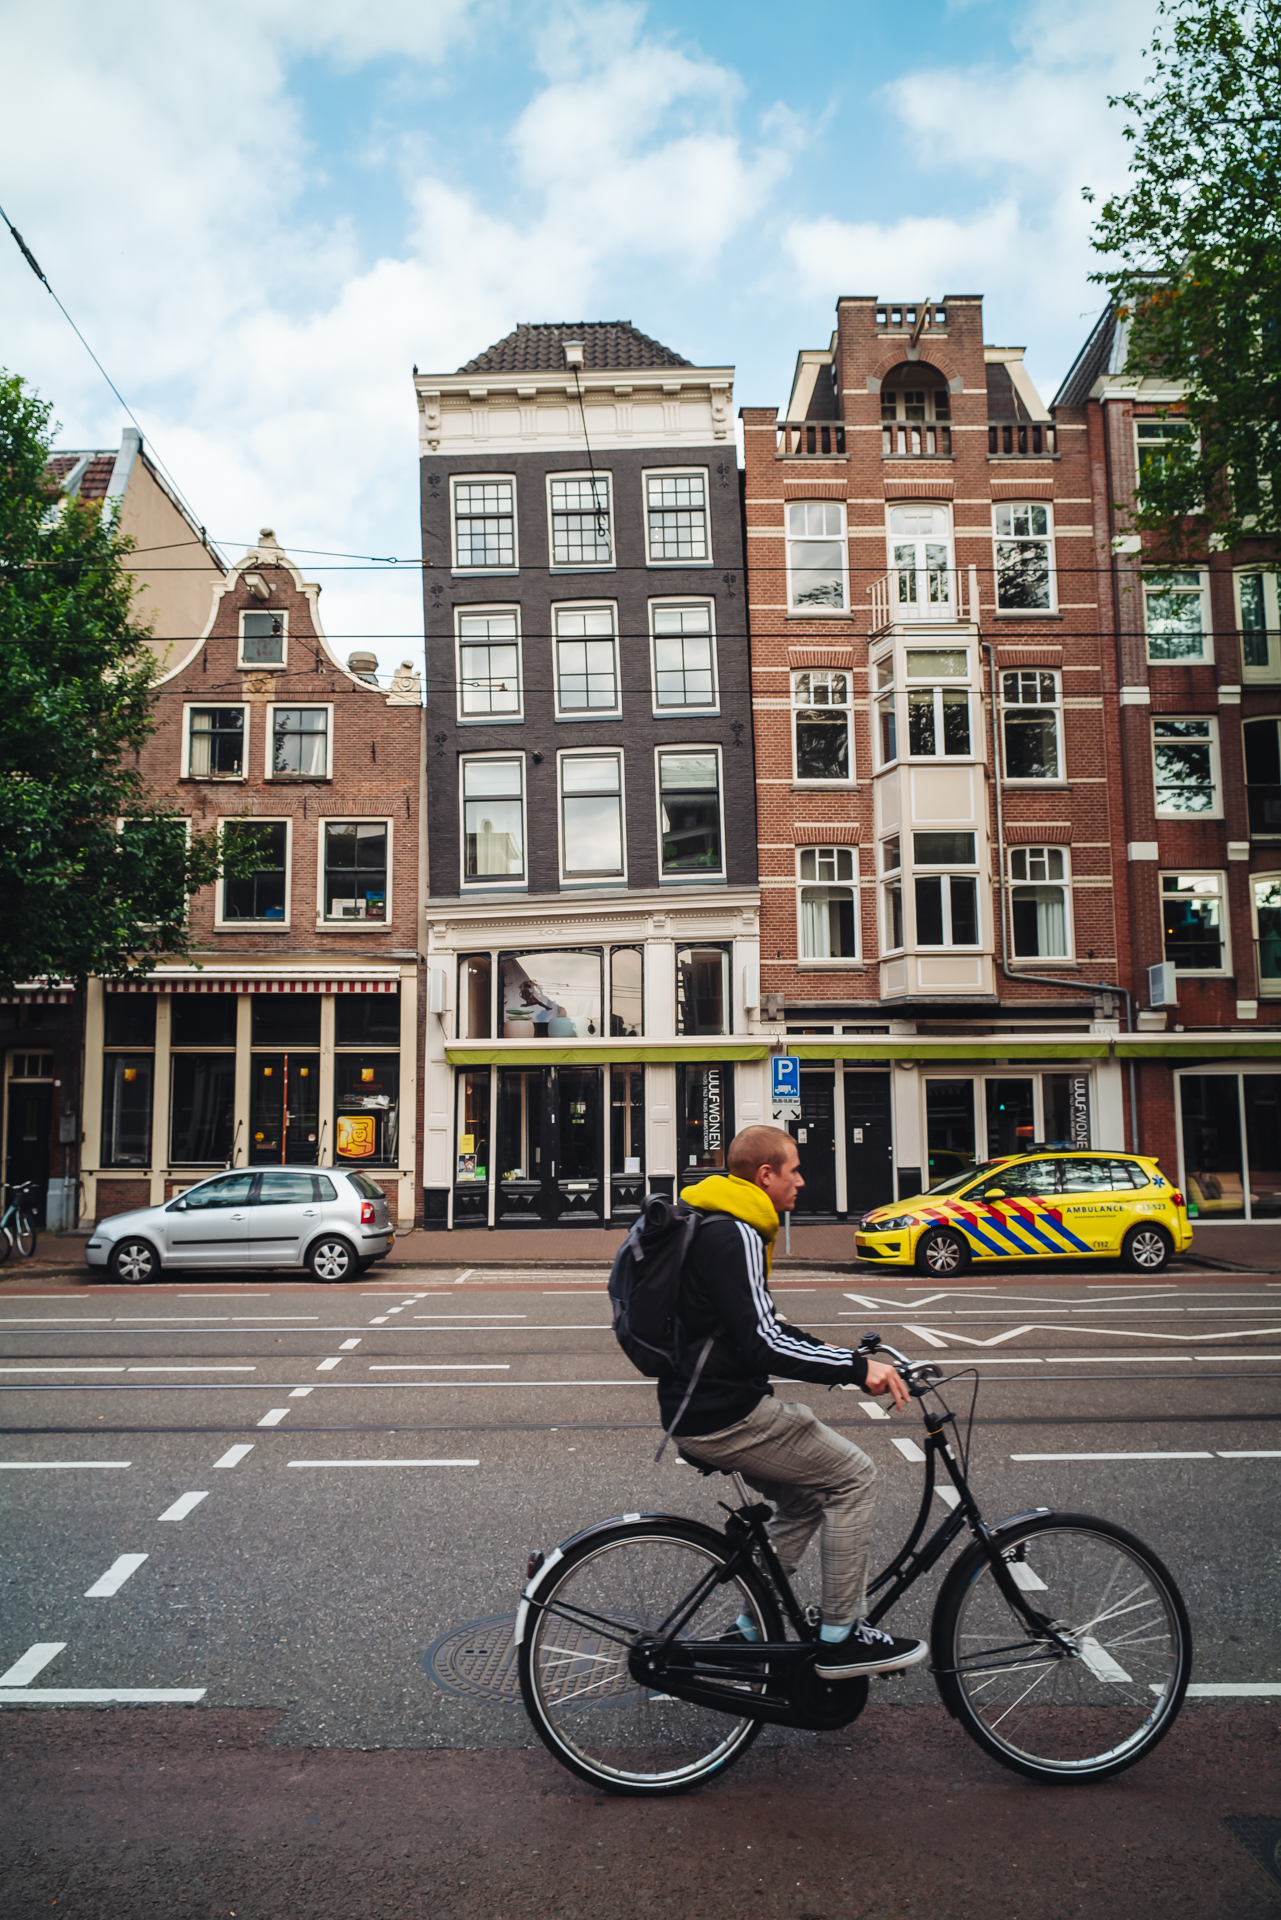 Street life in Amsterdam